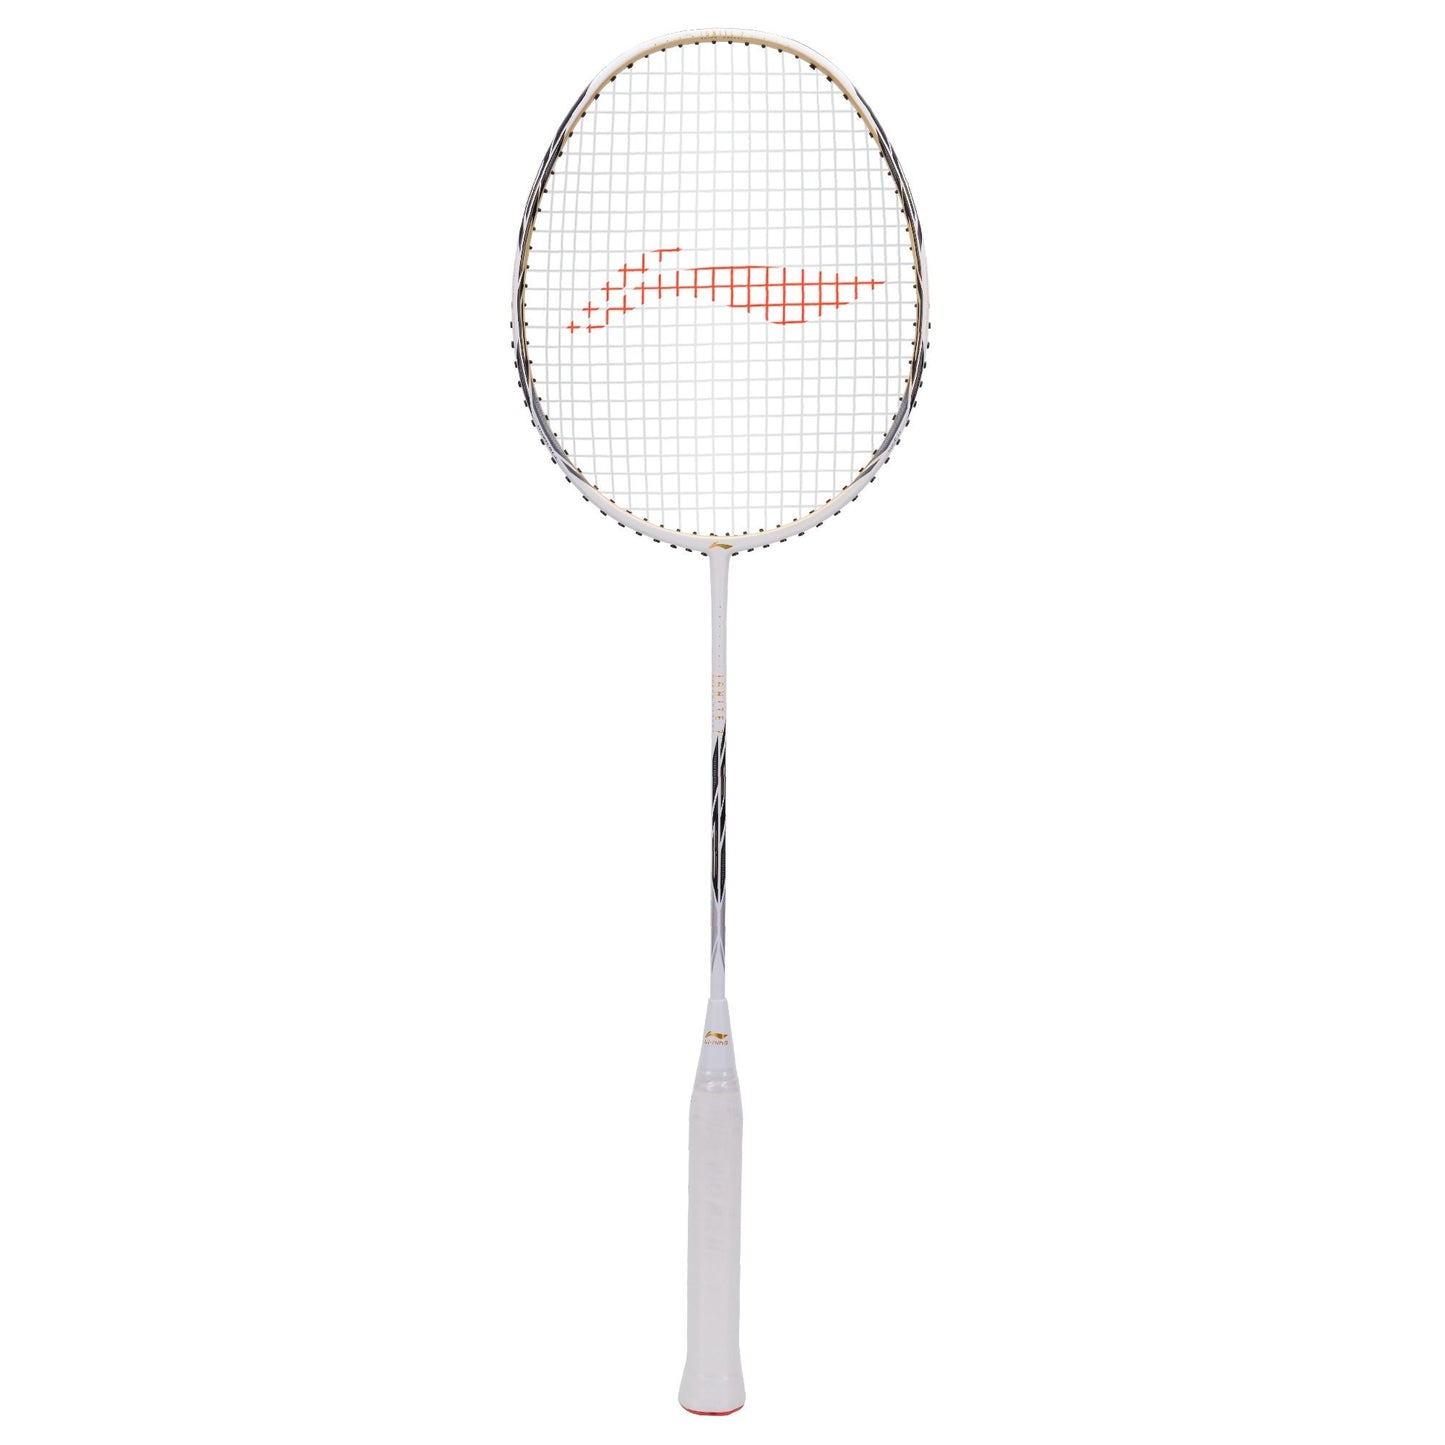 Li-Ning Ignite 7 (White/Black) Badminton Racket